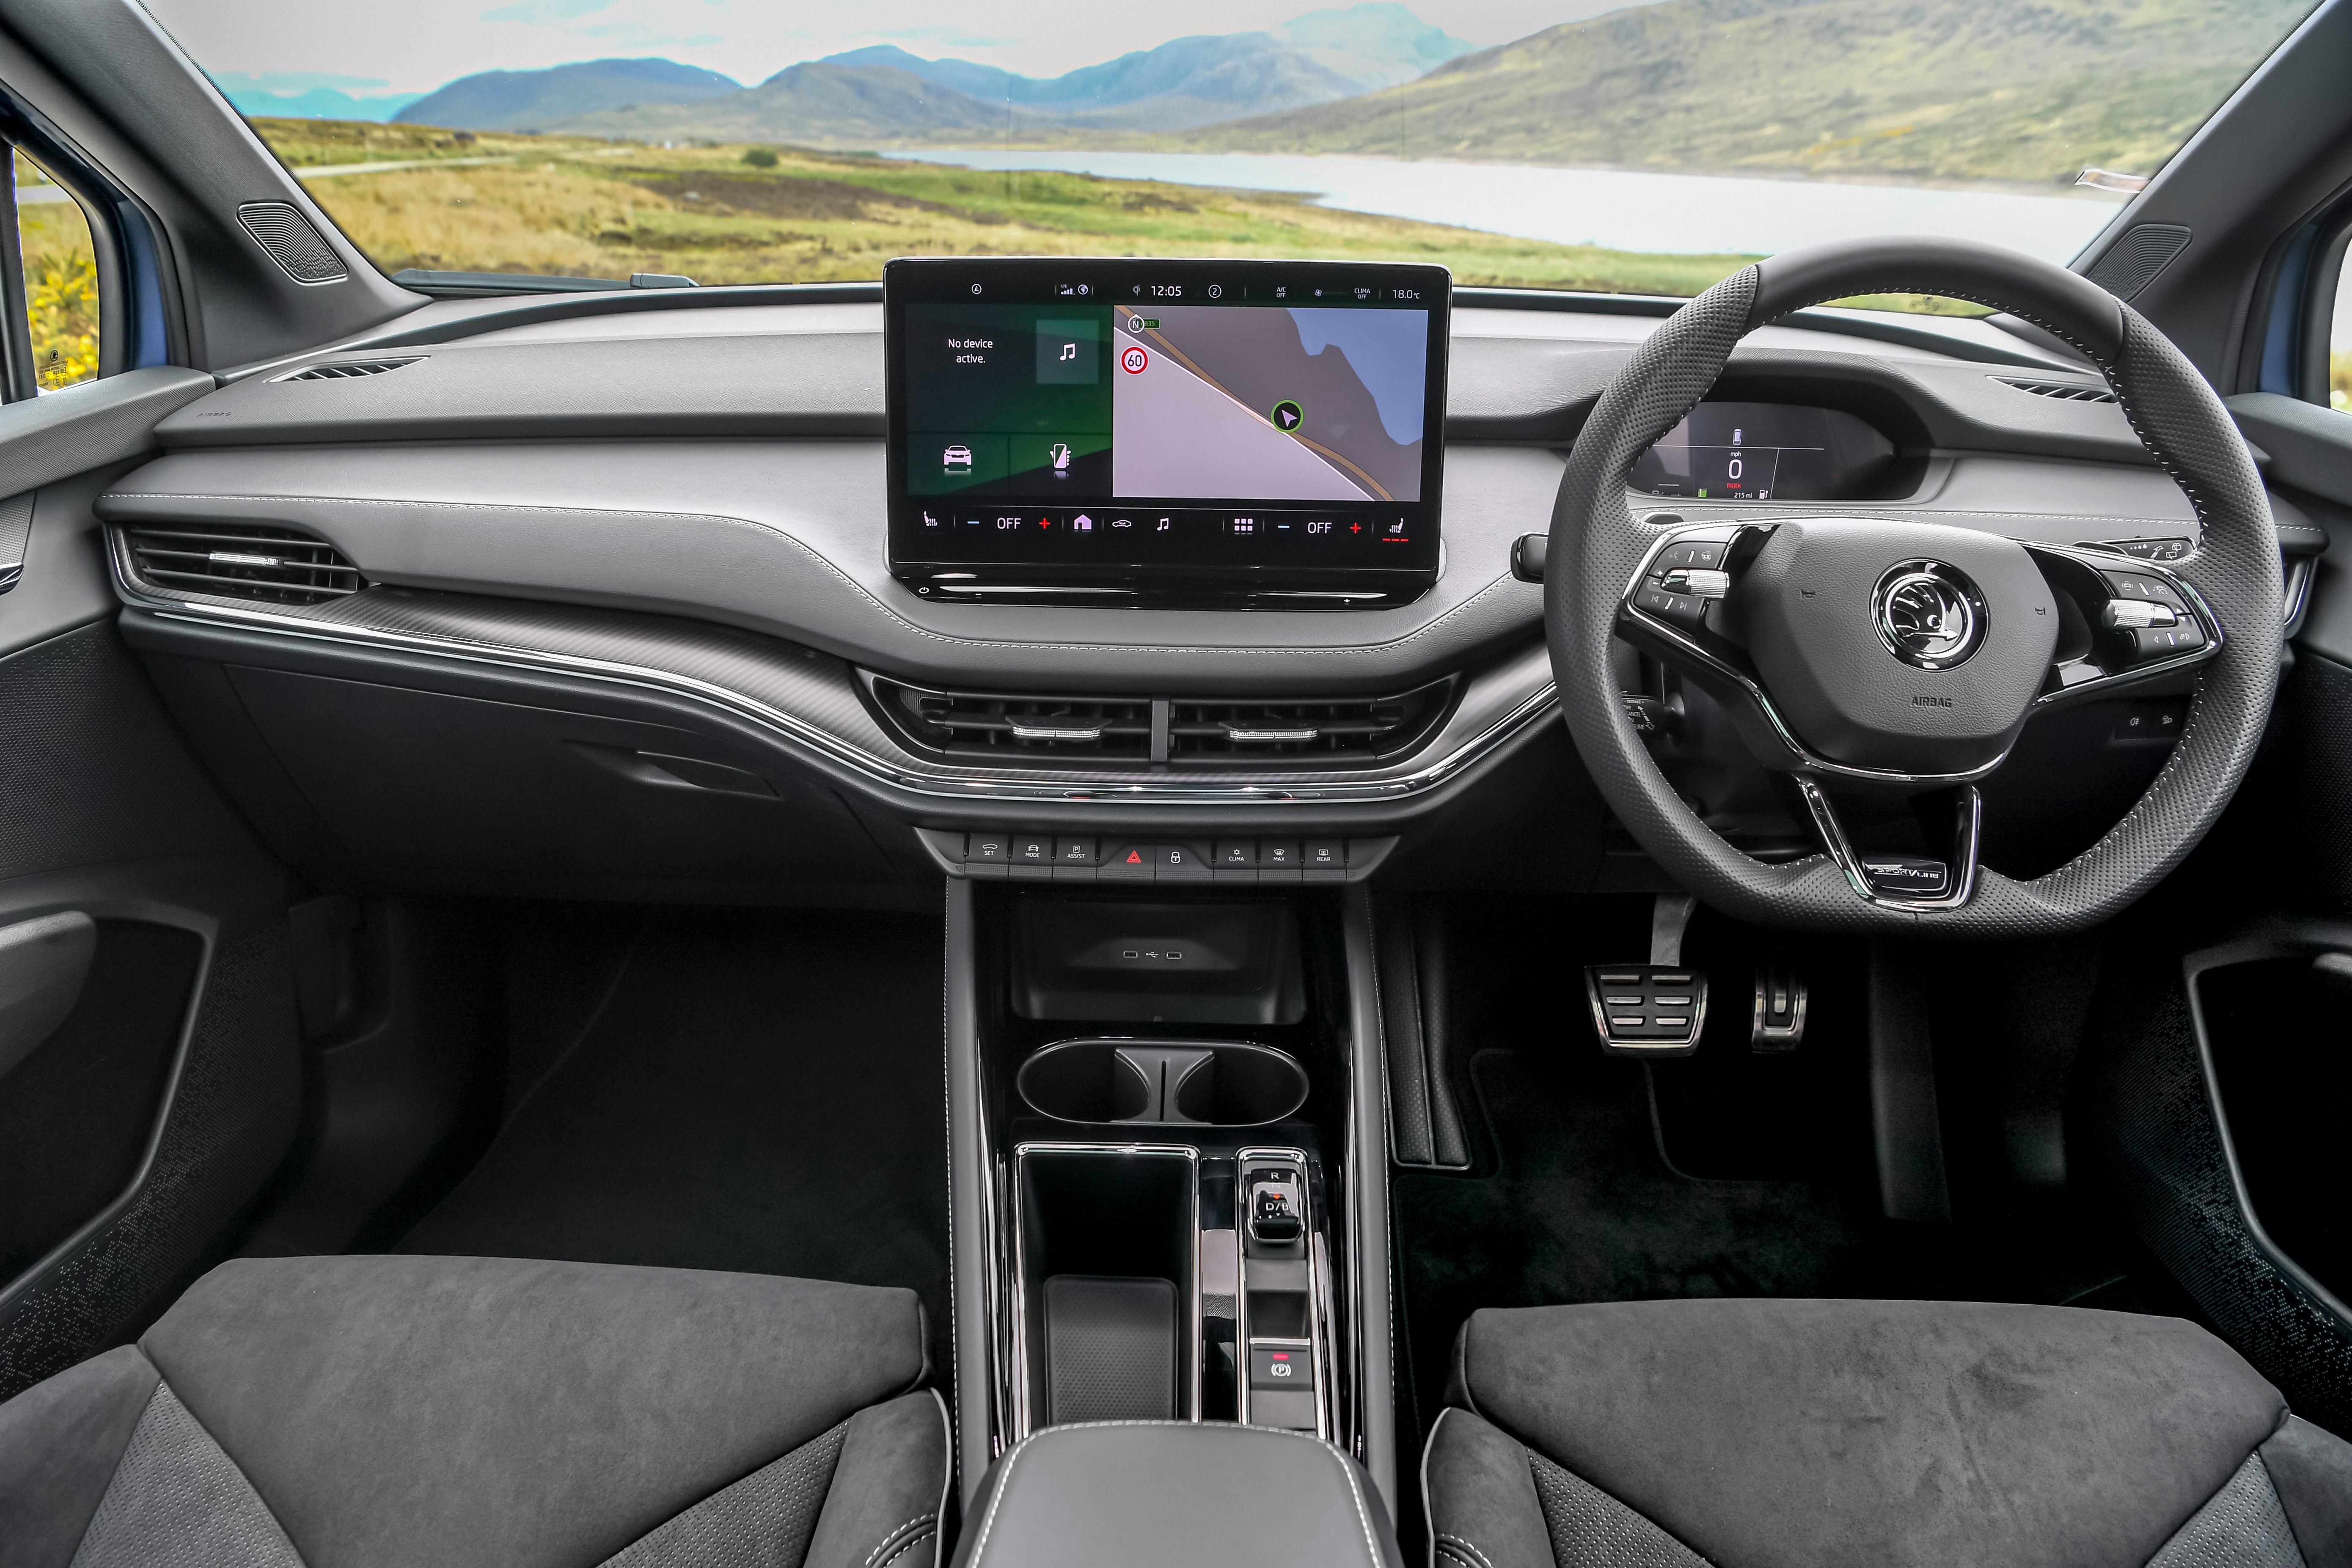 Skoda Enyaq iV Review 2022: interior including large touchscreen display